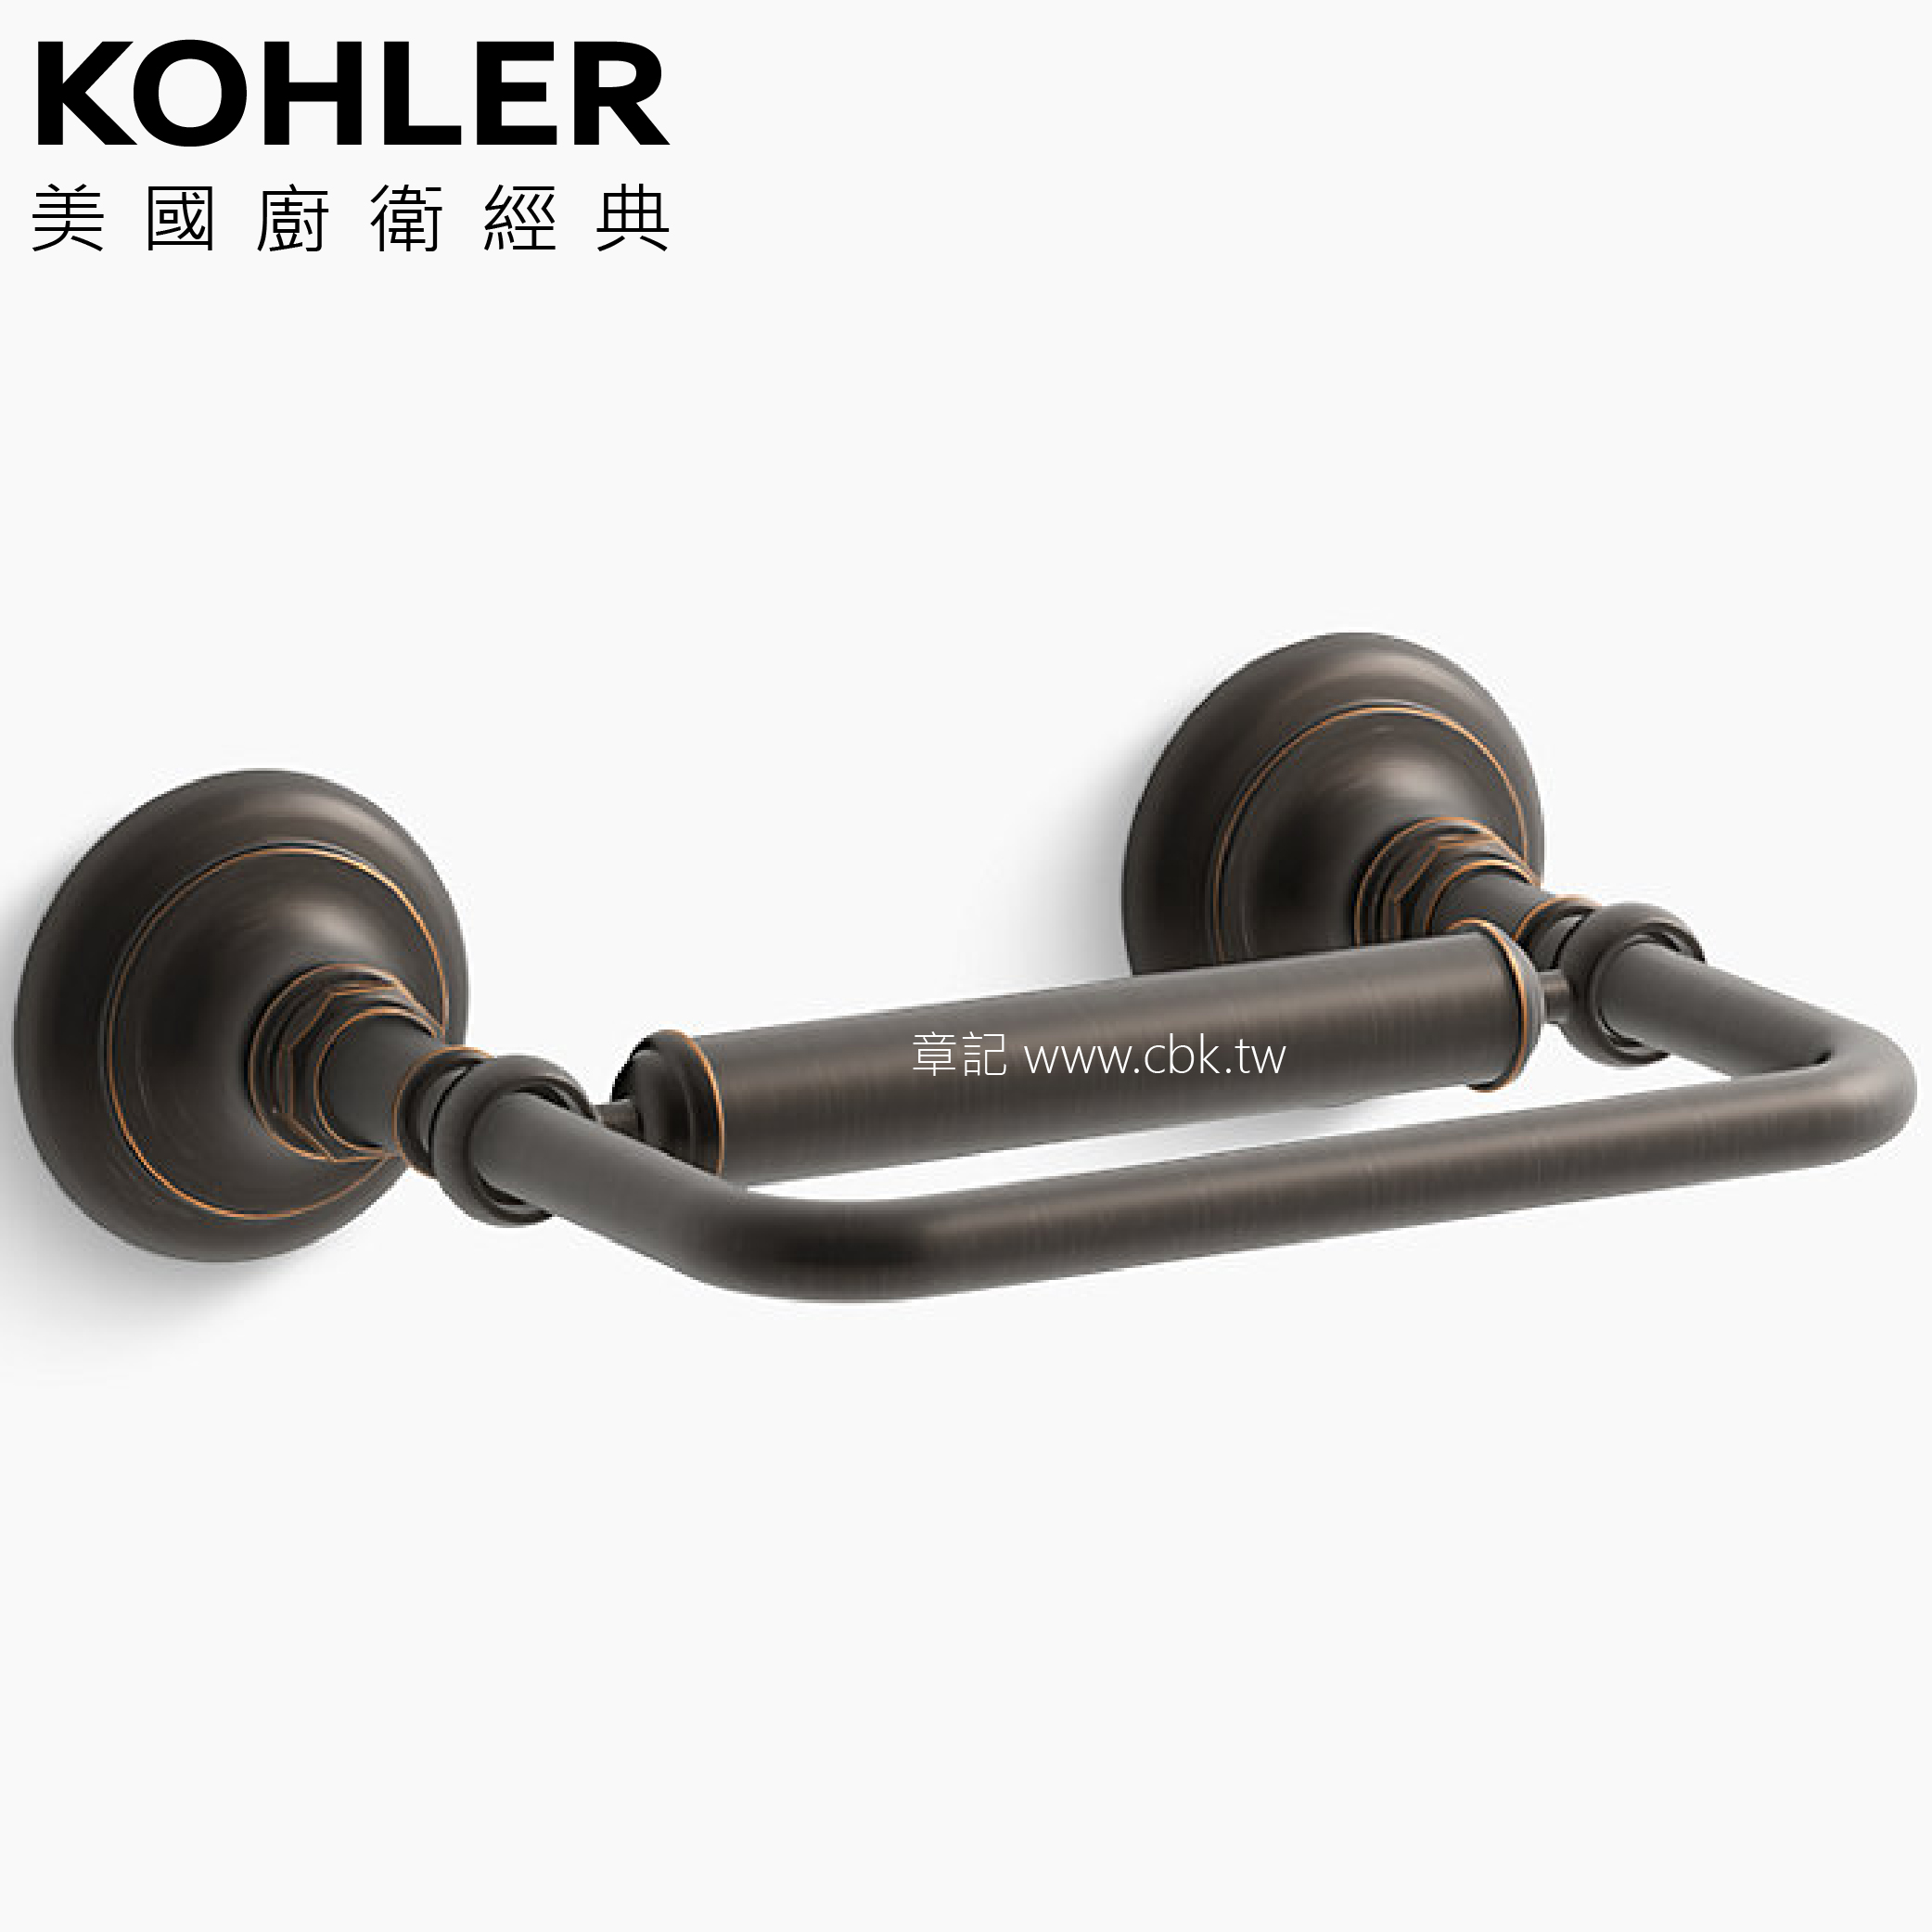 KOHLER Artifacts 廁紙架 K-72573T-2BZ 